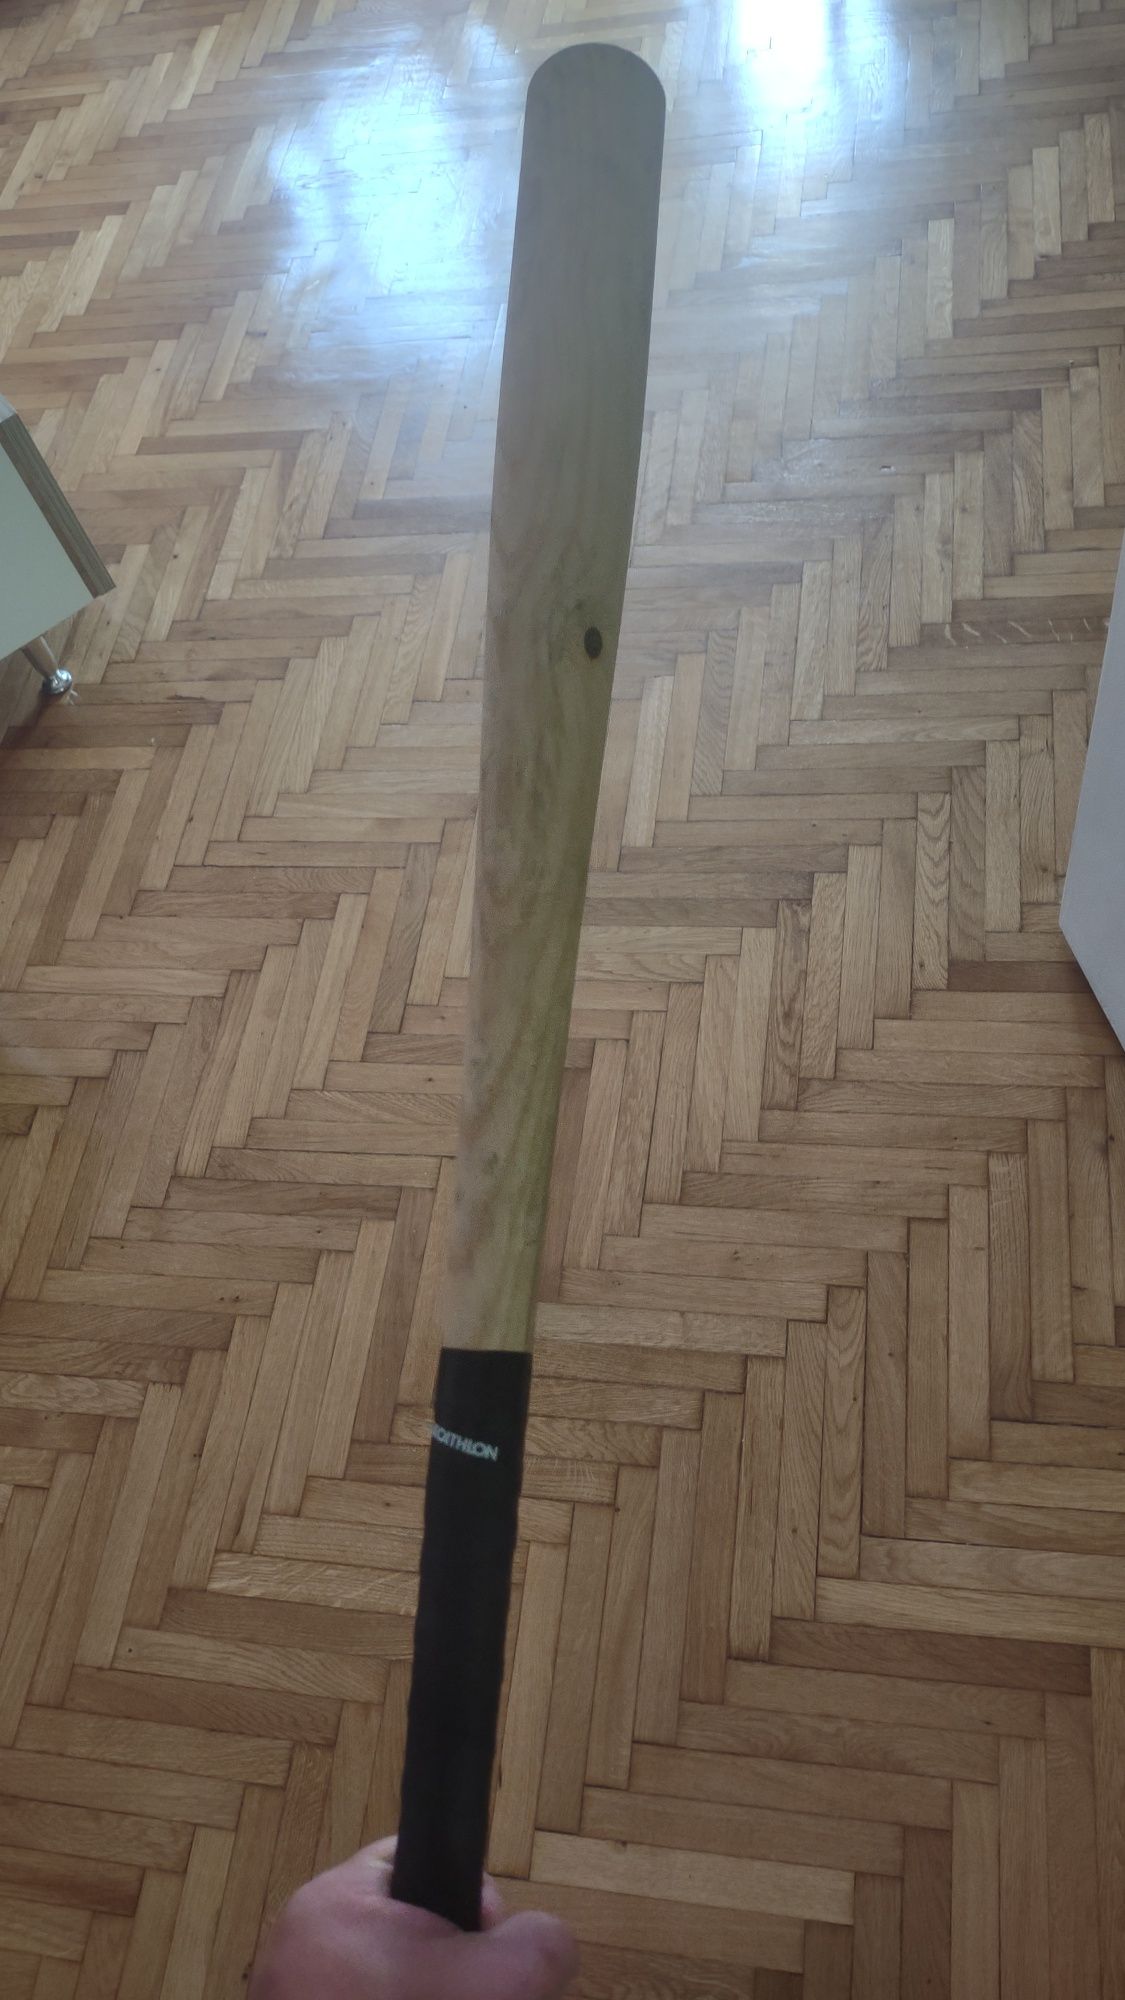 Baston (bâtă) baseball recreațional 32 inch lemn